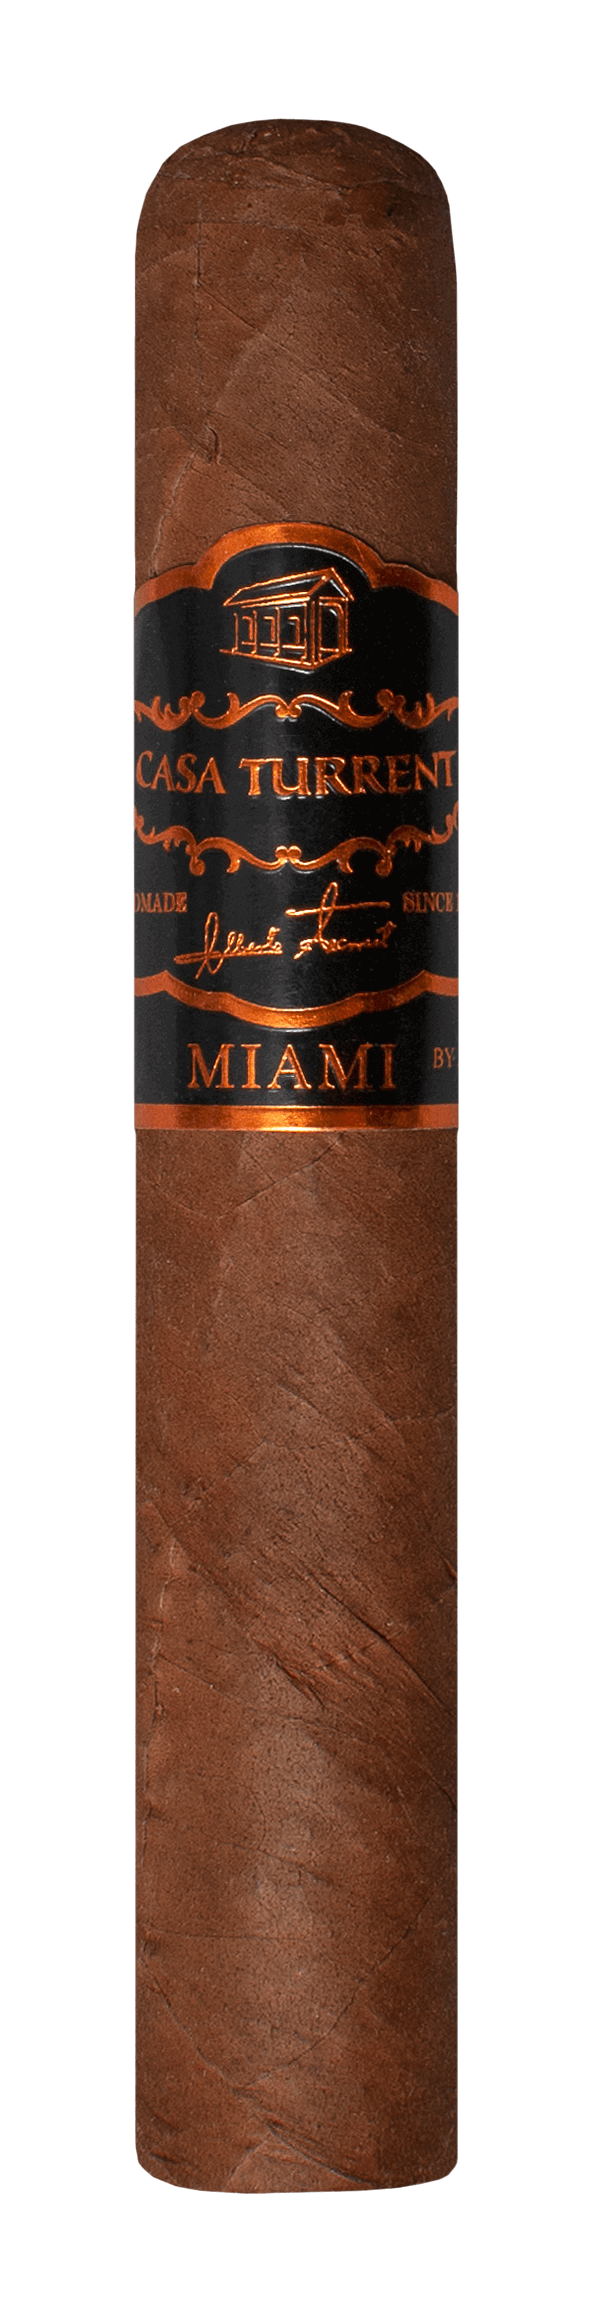 Casa Turrent Origen Miami Robusto Zigarre